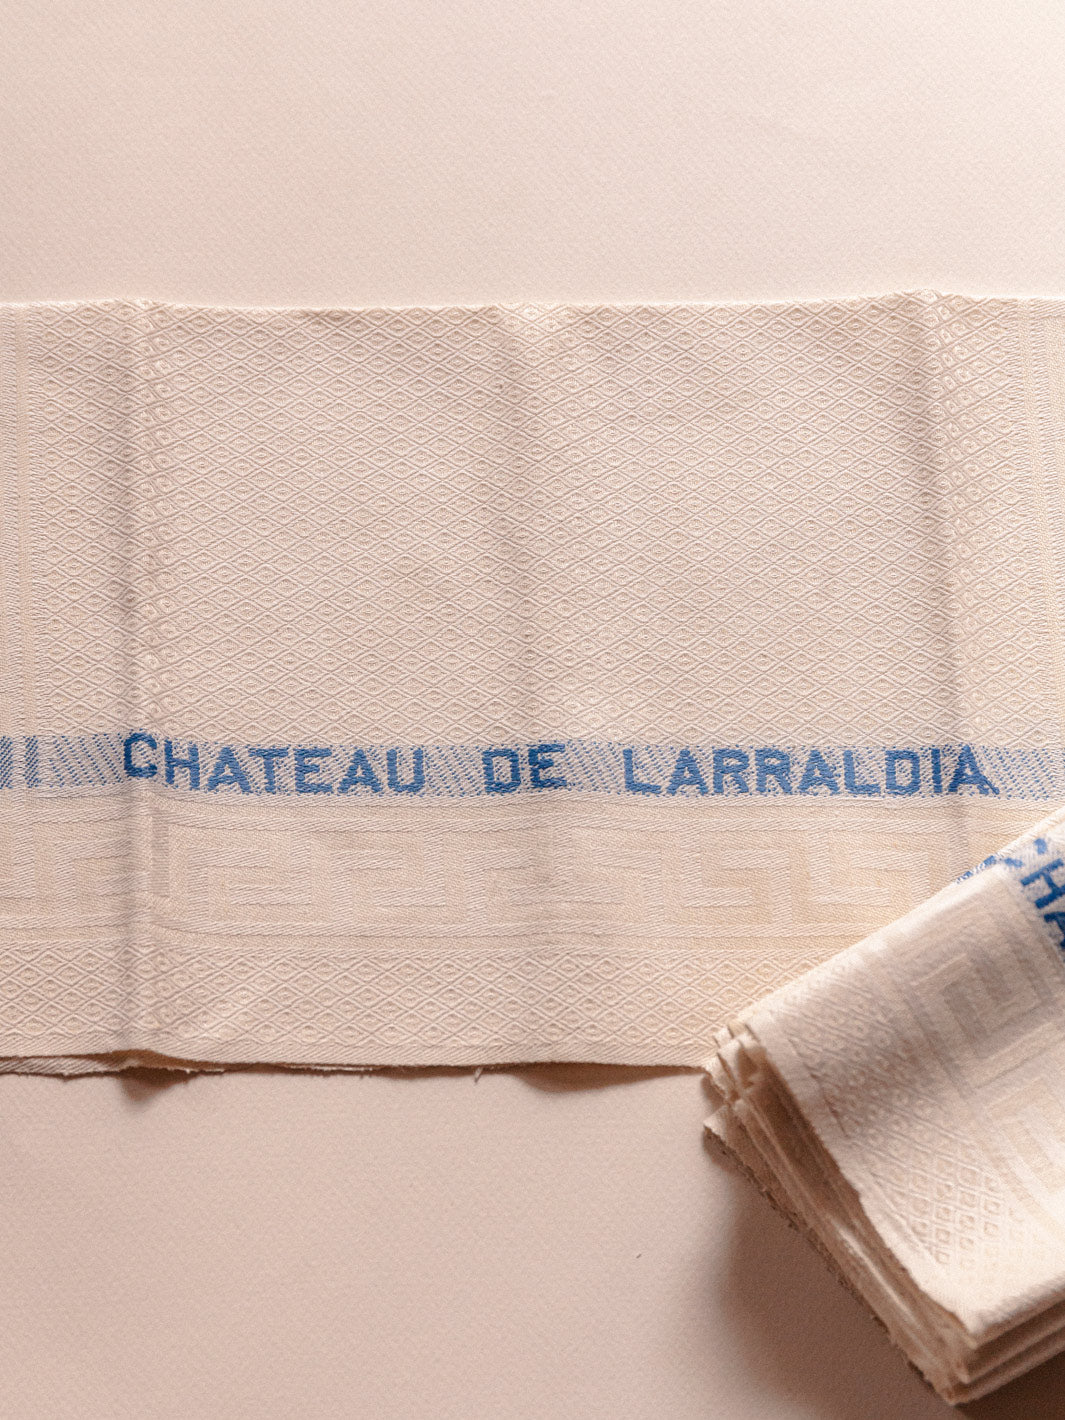 Lot de 10 serviettes Château de Larraldia